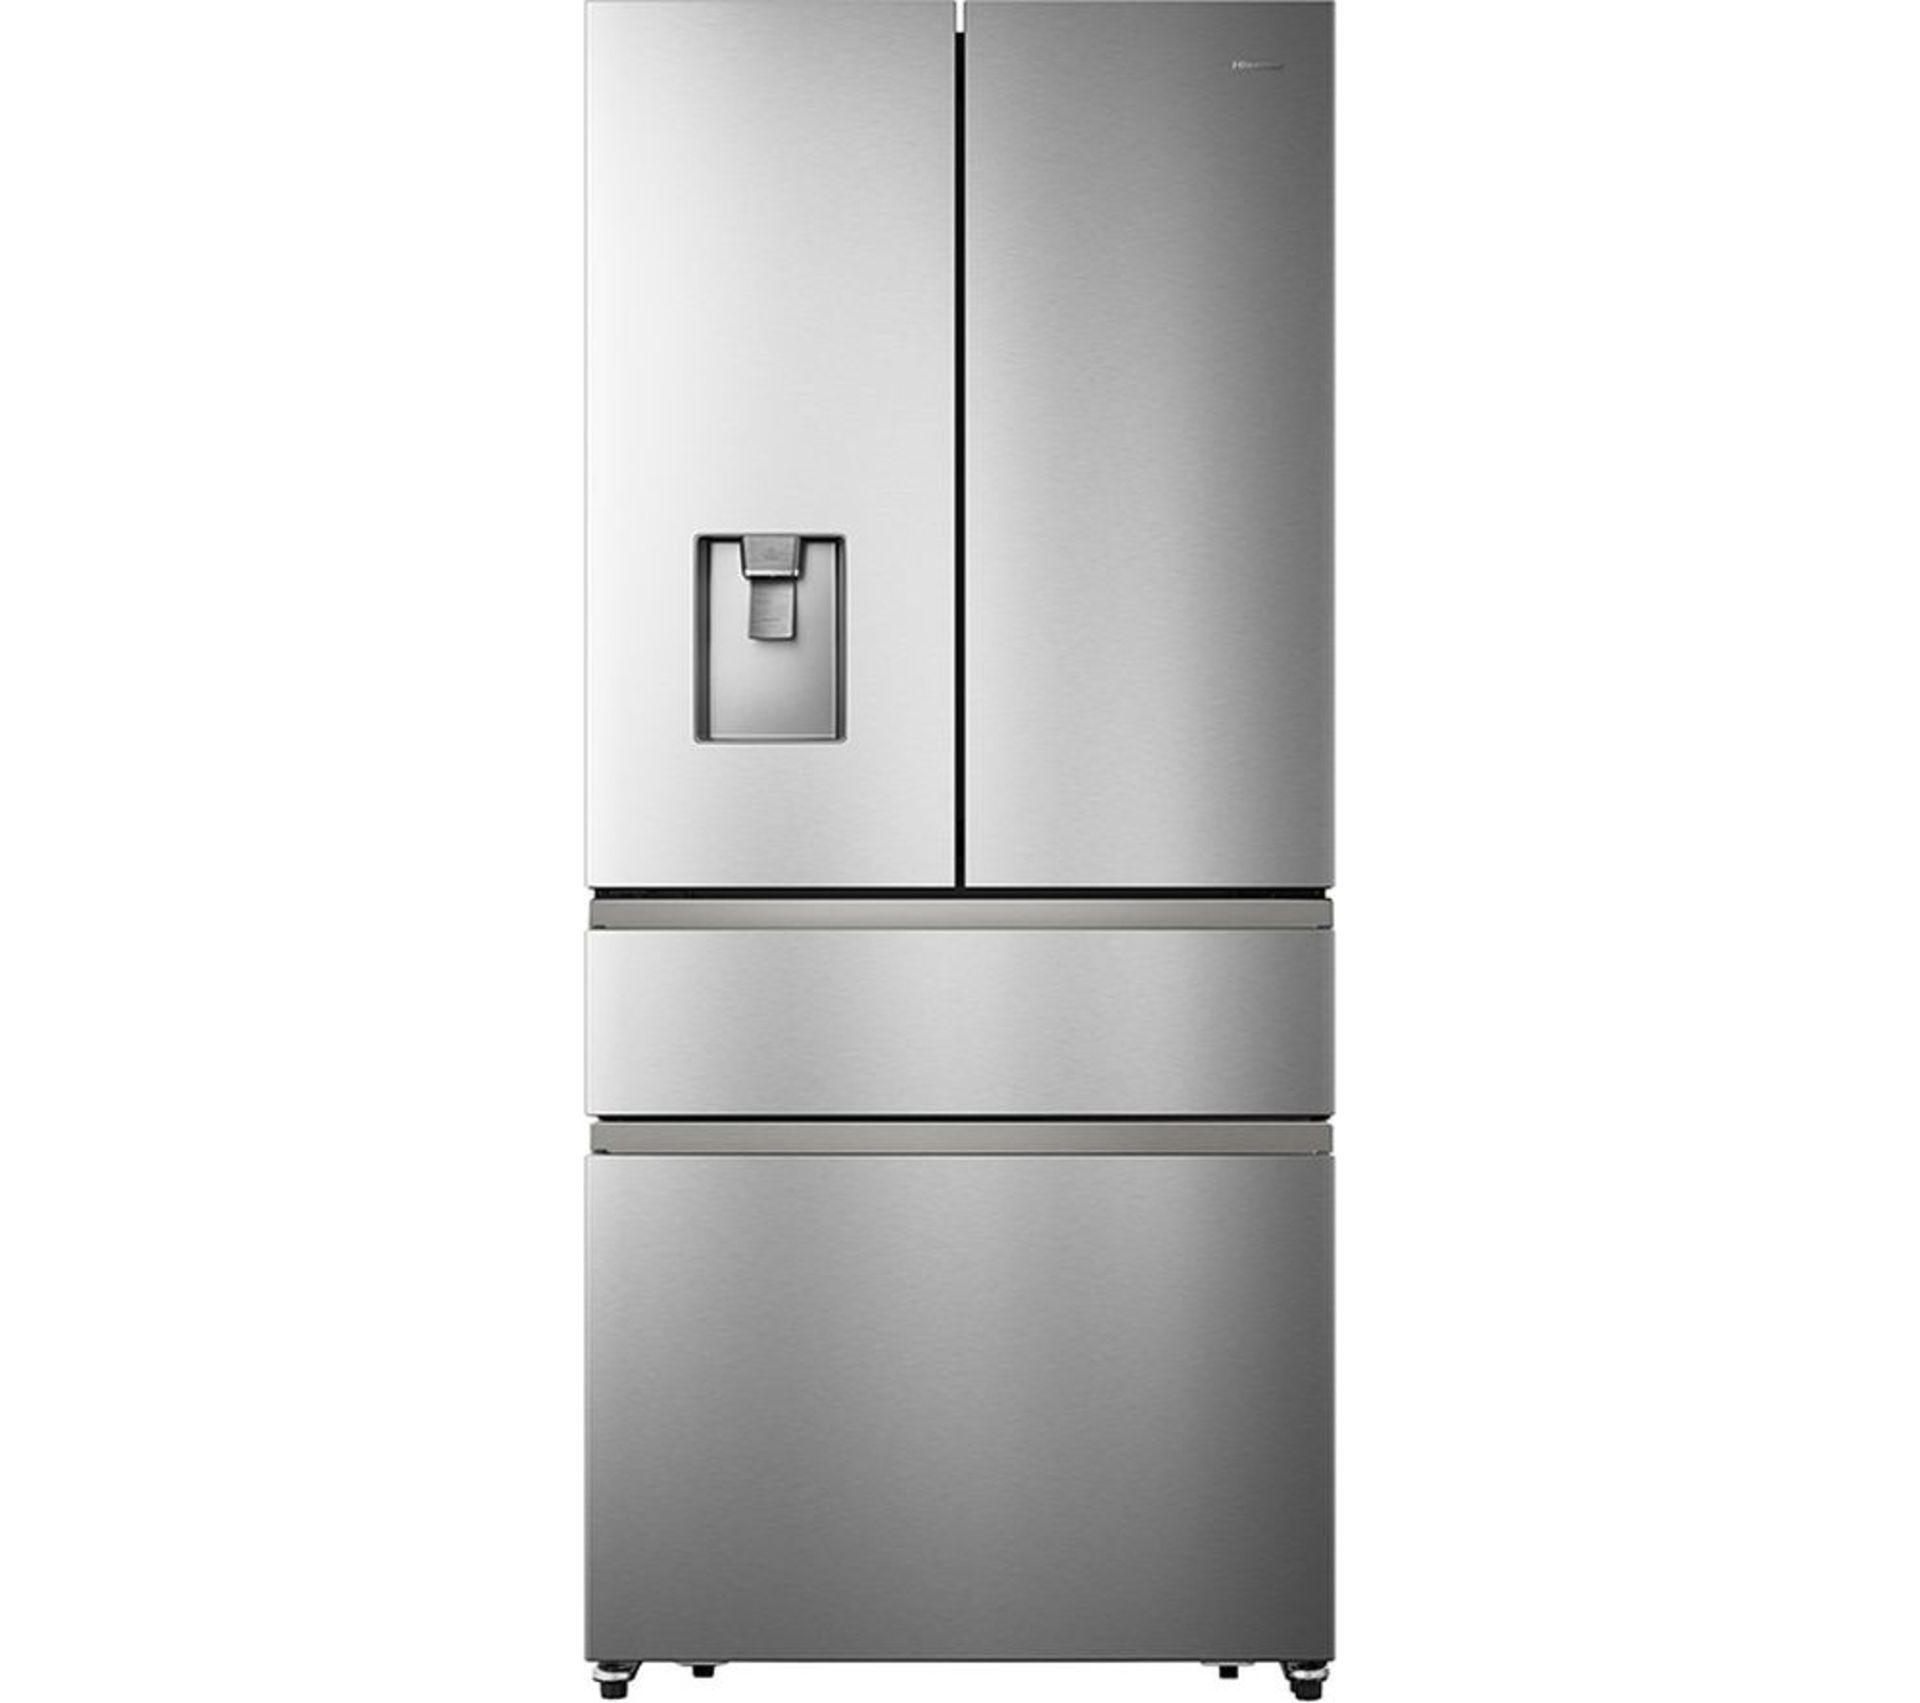 1 x HiSense Pureflat RF540N4Wi1 Stainless Steel Fridge Freezer - Unused With Warranty - RRP £849 - Image 6 of 9